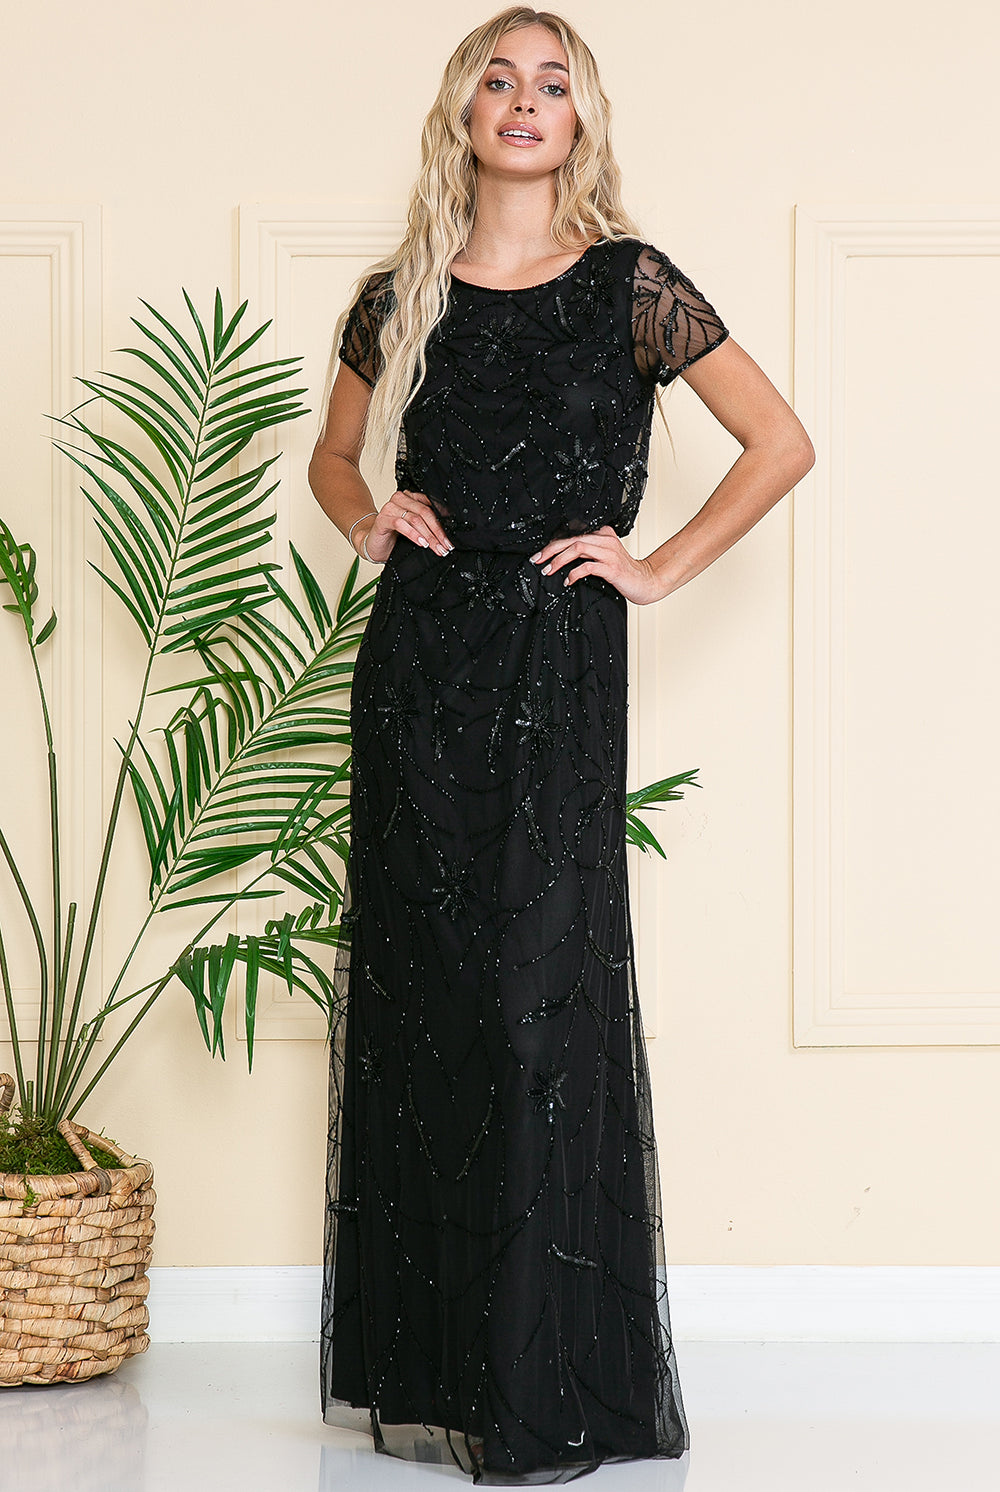 Glitter-Embellished Long MOB Dress w/Short Sleeves-smcdress